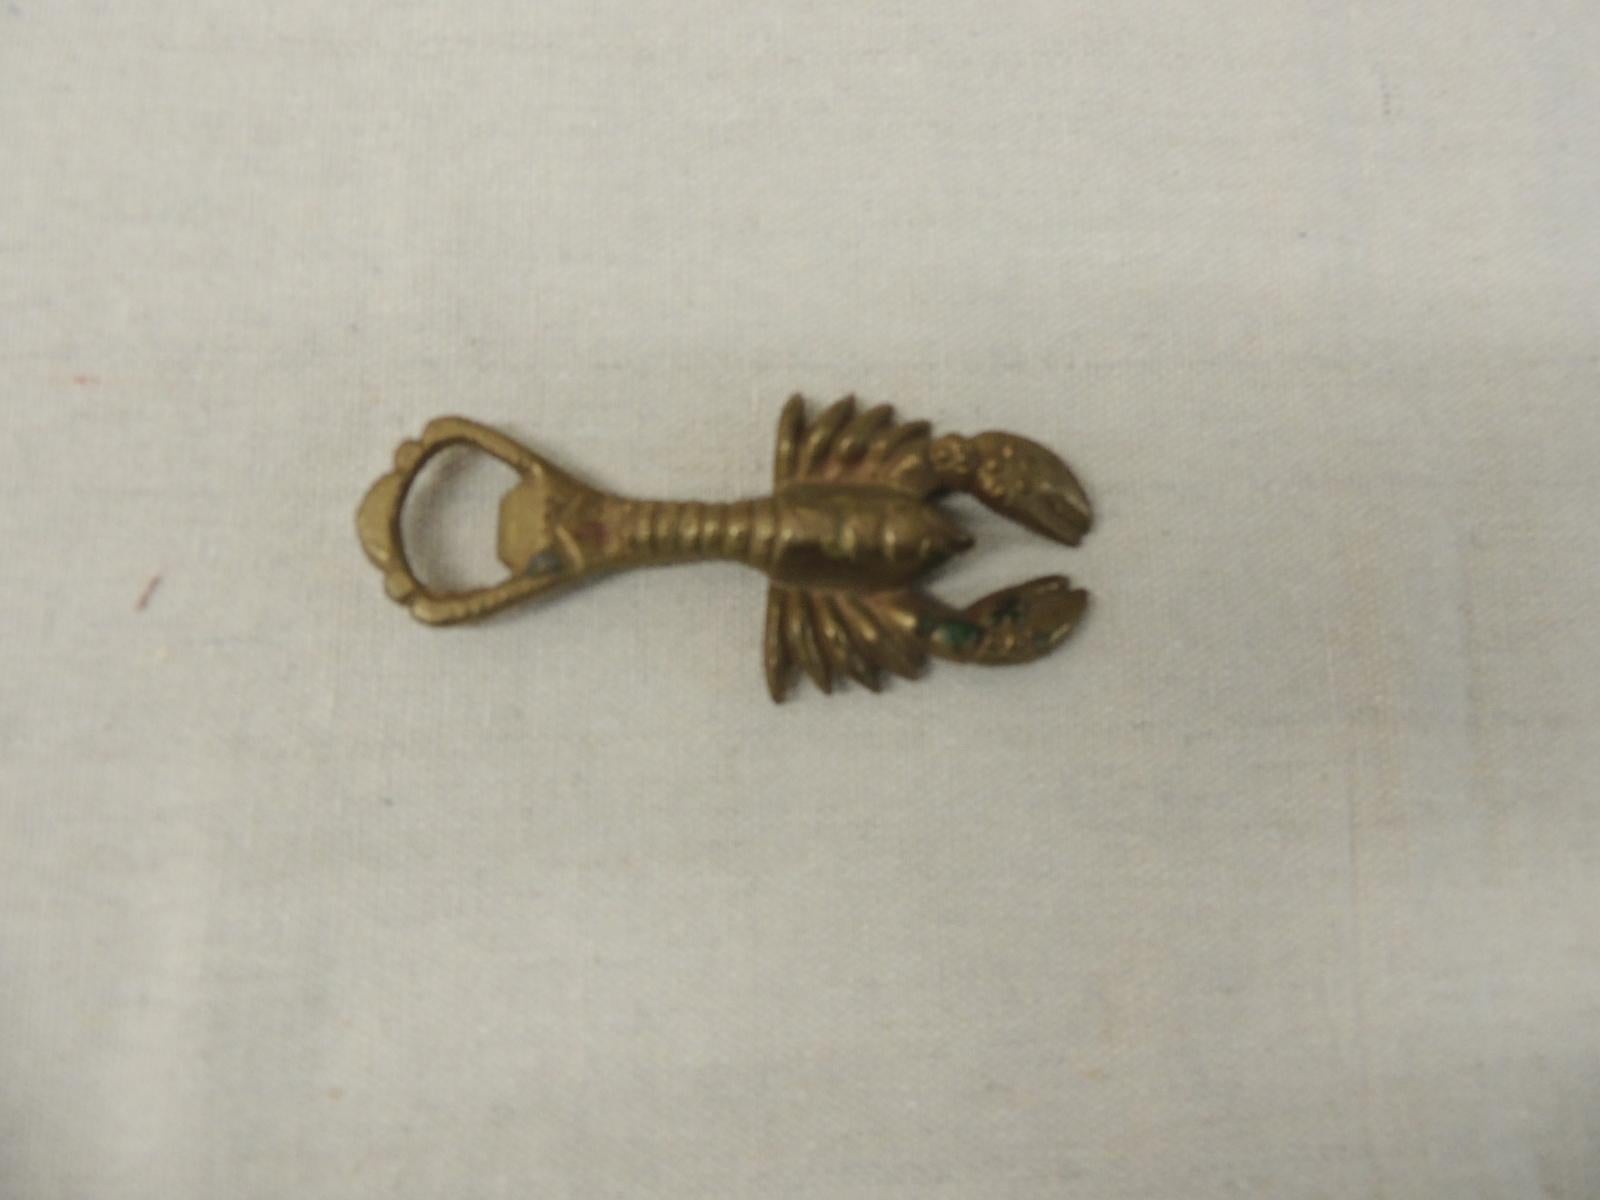 Vintage brass bottle opener in shape of a lobster.
Size: 4.75